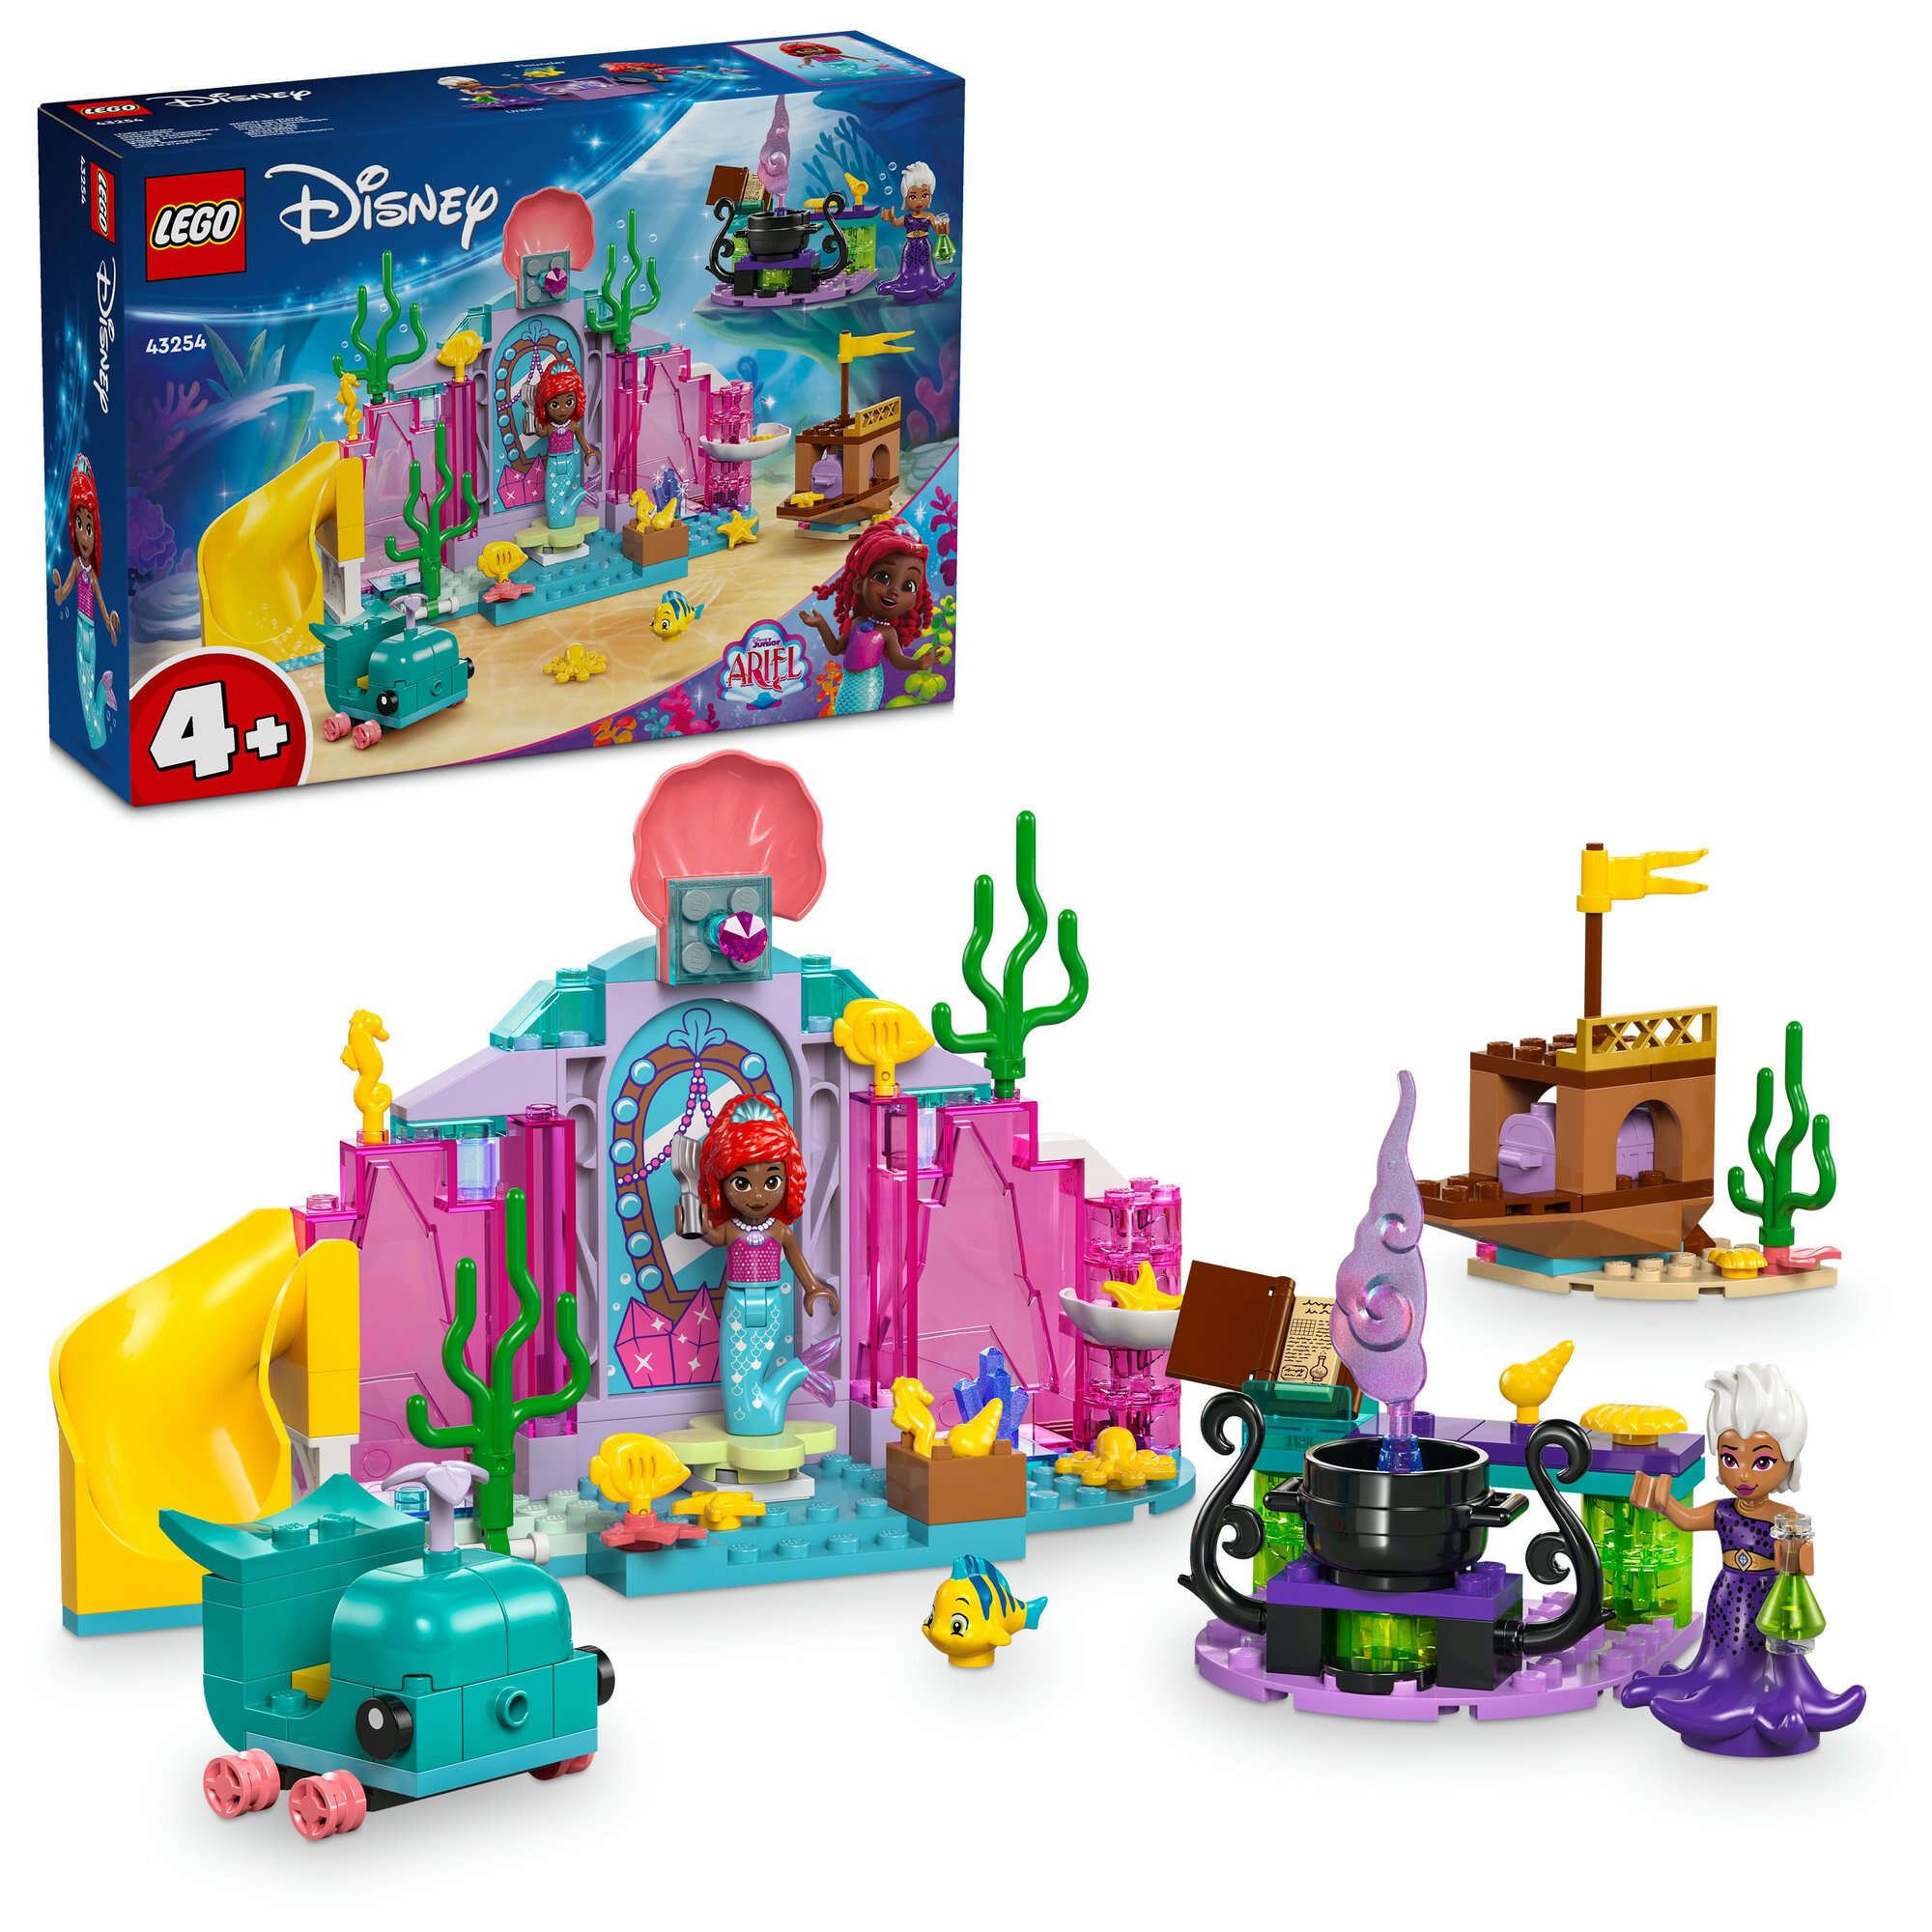 LEGO 43254 Disney Arielles Kristallhöhle, Ursula, Arielle und Fabius, Walboot